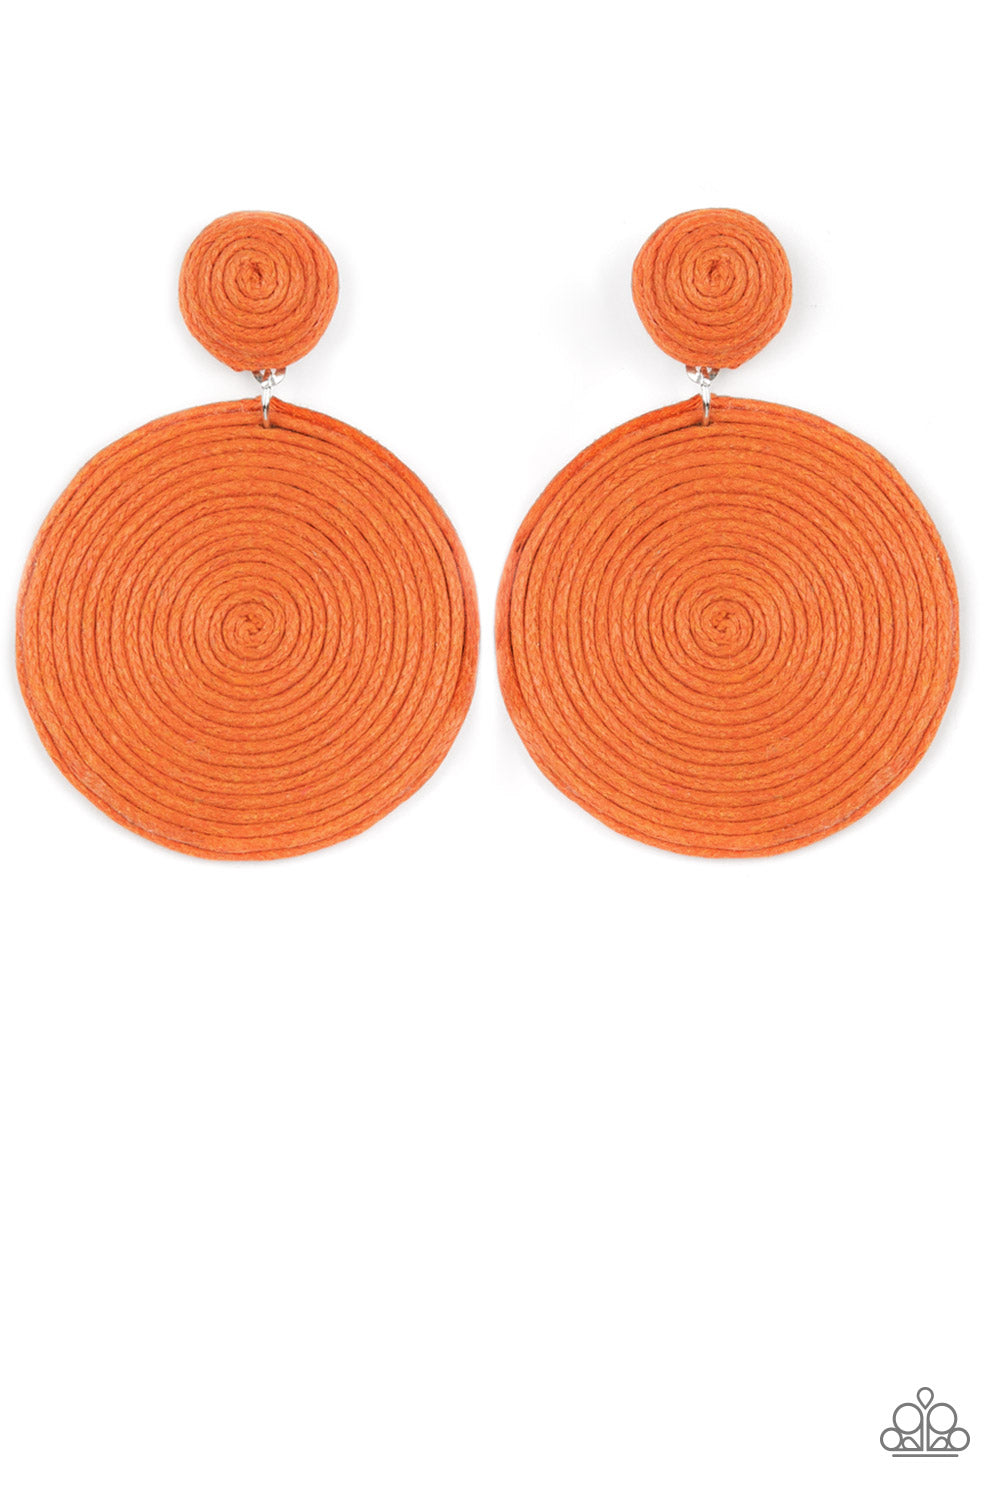 Circulate The Room - Orange Earring freeshipping - JewLz4u Gemstone Gallery